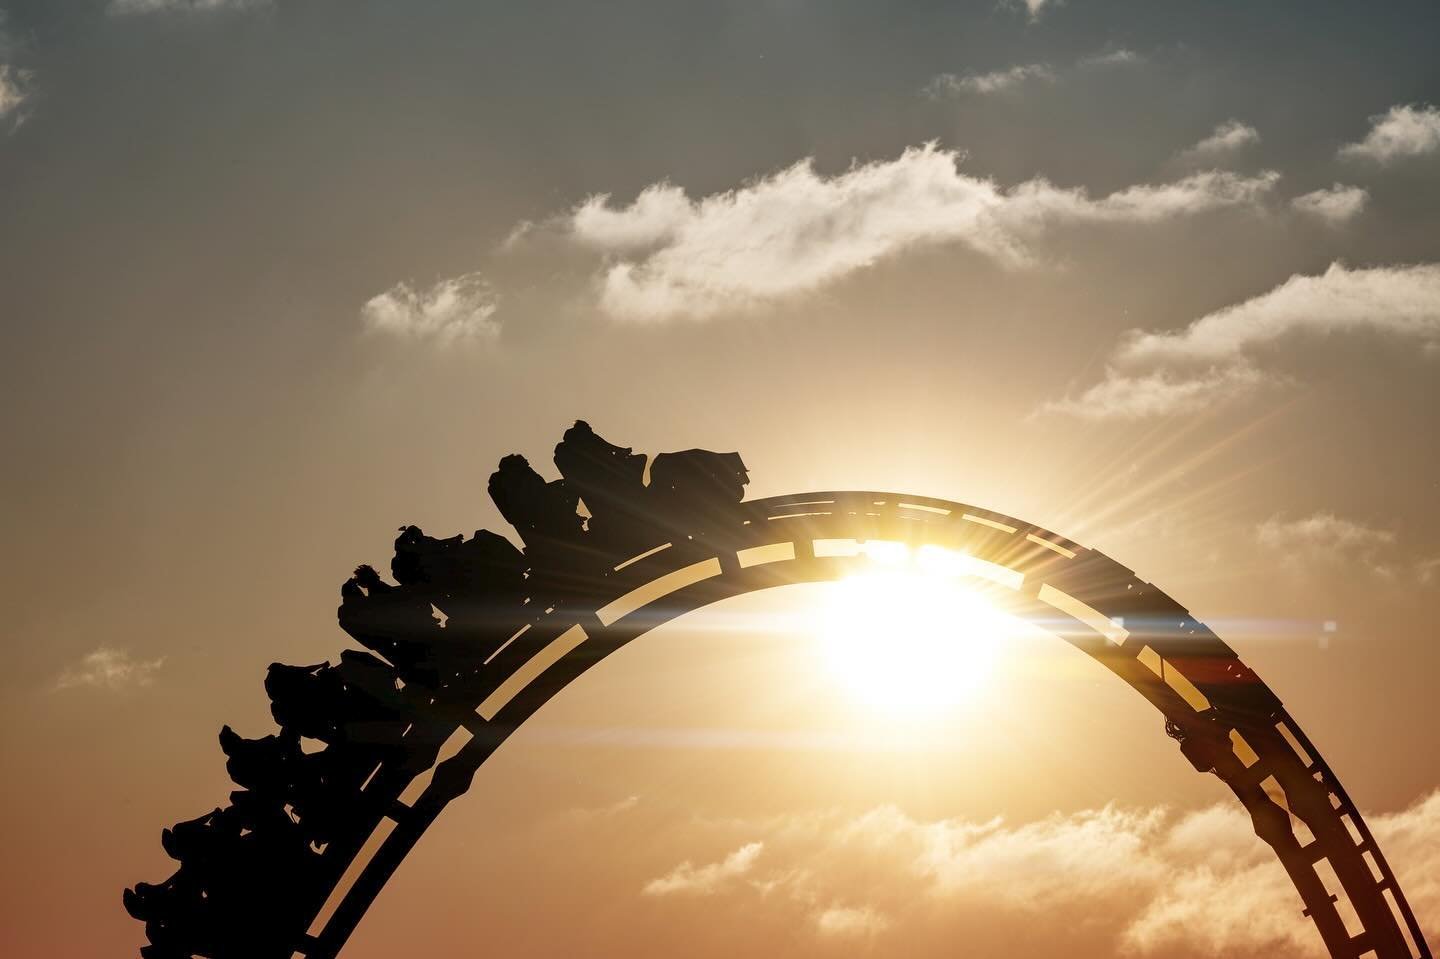 Best coaster ever built?!
.
.
🎢 VelociCoaster - Universal Studios Islands of Adventure (@universalorlando)
.
.
⚙️ Intamin Amusement Rides (@intaminofficial)
.
.
📸: @park_paradise
📱: Use #ParkParadise
.
#ThemeParkAdventures #RollerCoasterThrills #A